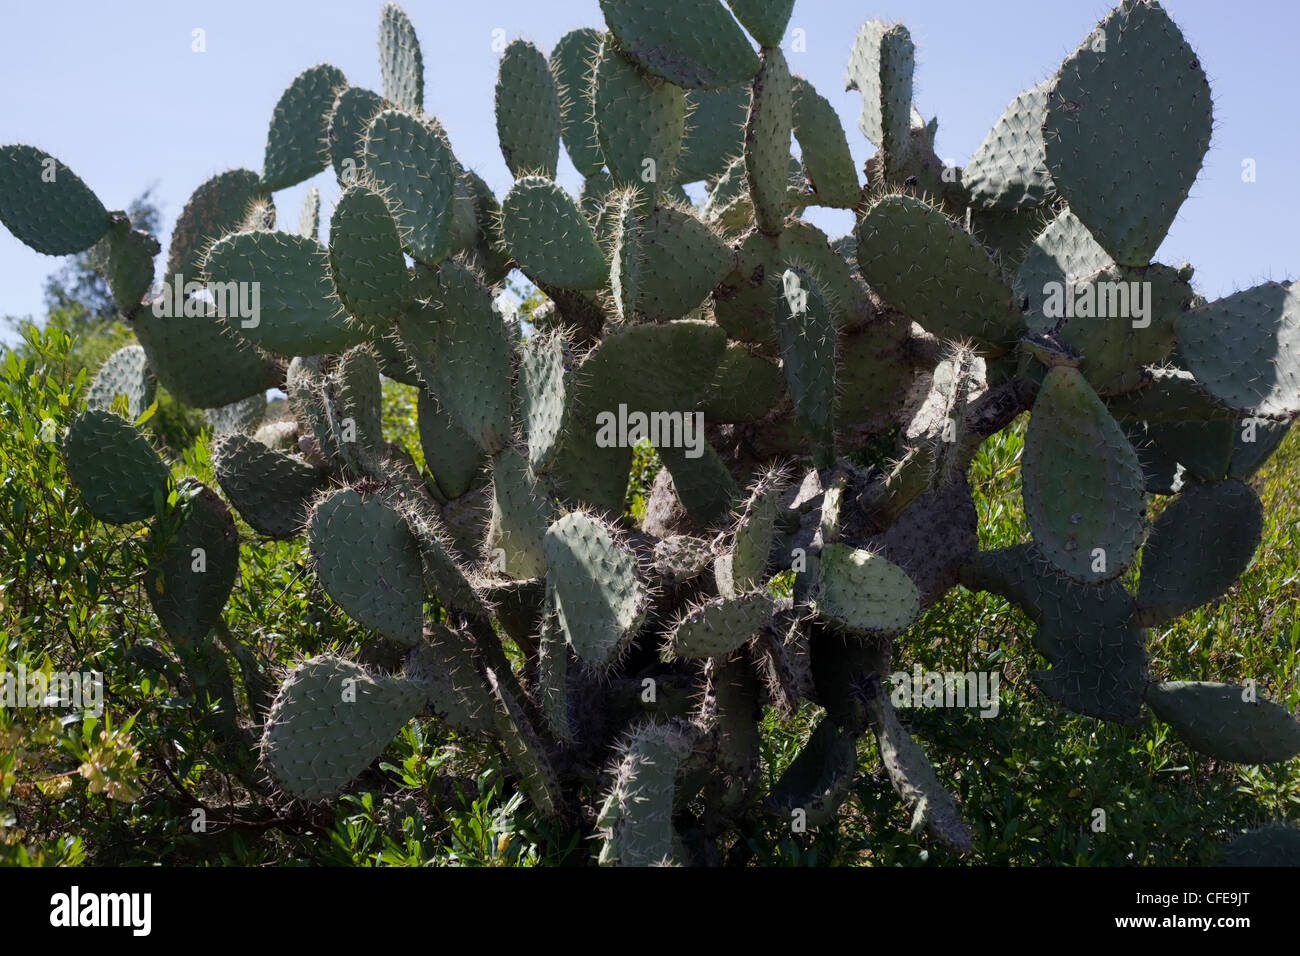 Cactus (Opuntia sp. ). Long established introduction. Here at Debre Libanos. Ethiopia. Stock Photo